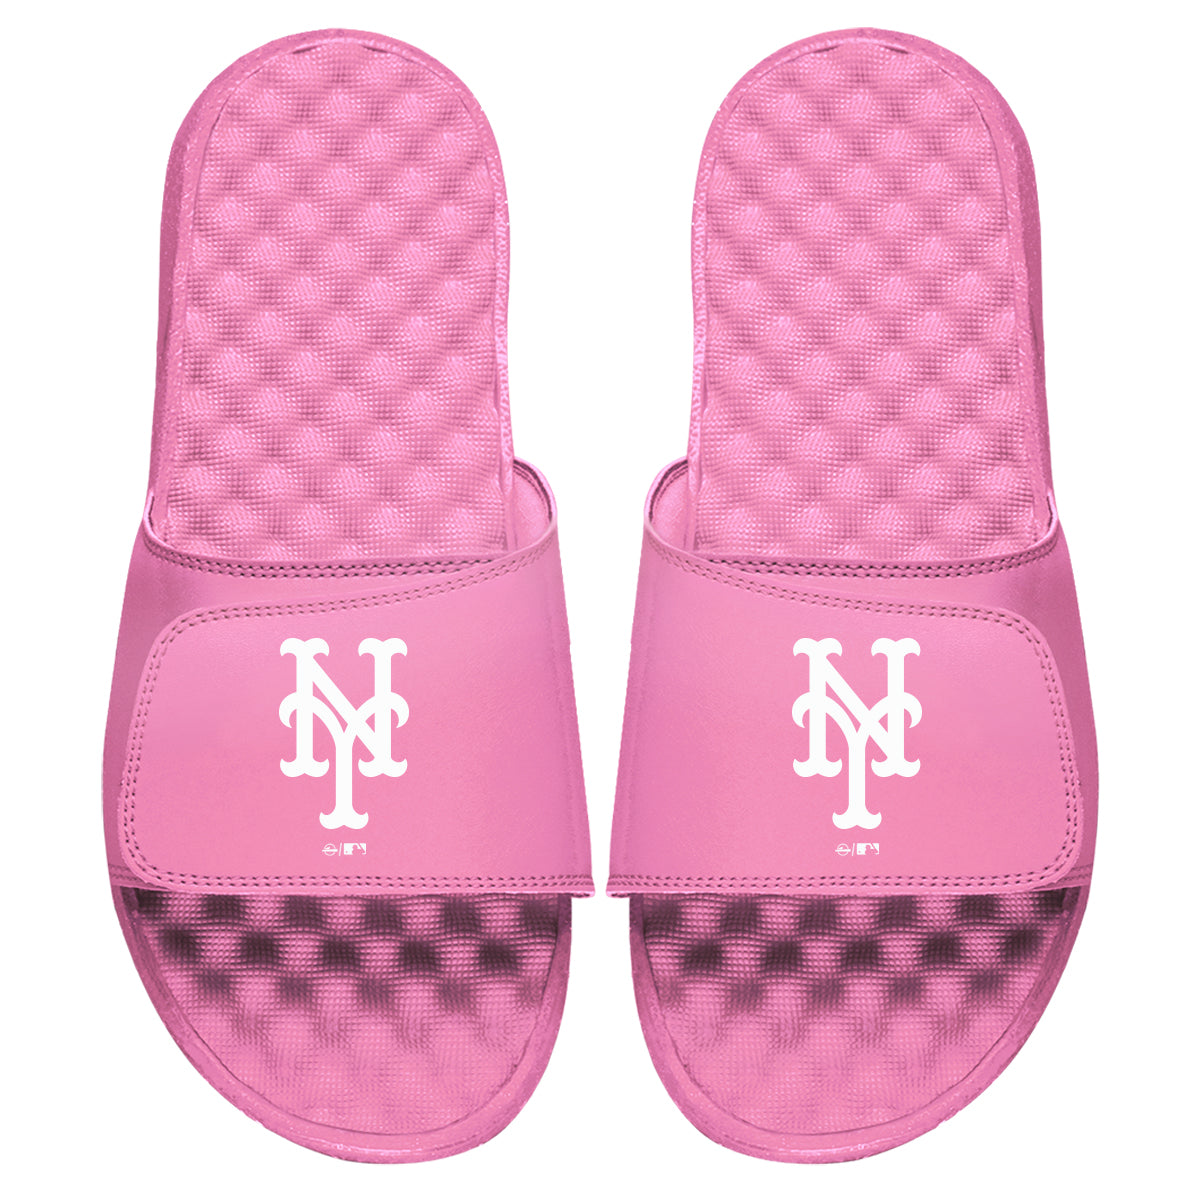 New York Mets Primary Pink Slides